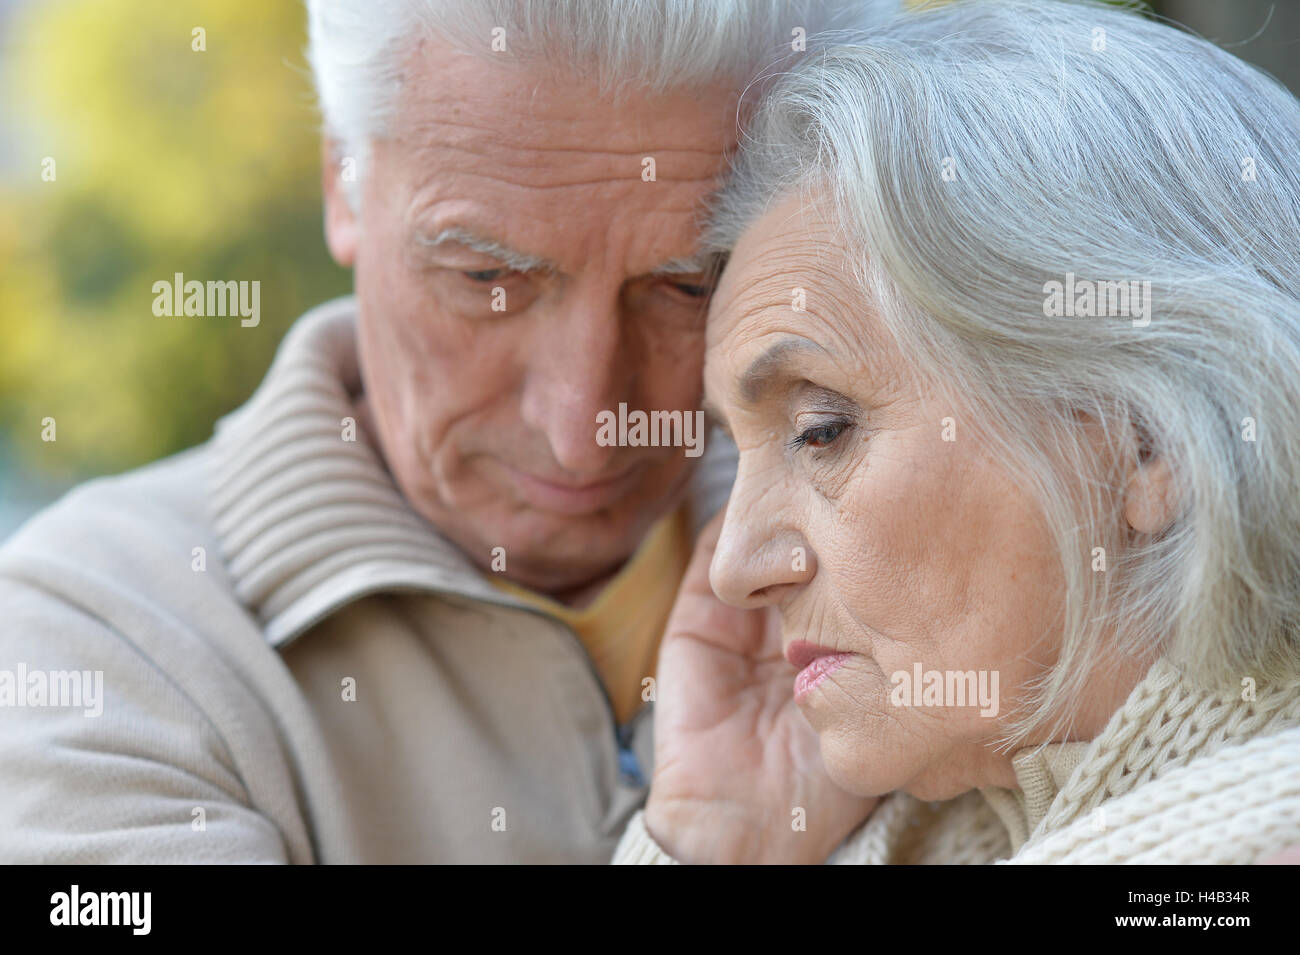 Sad elderly couple standing embracing outdoors Stock Photo